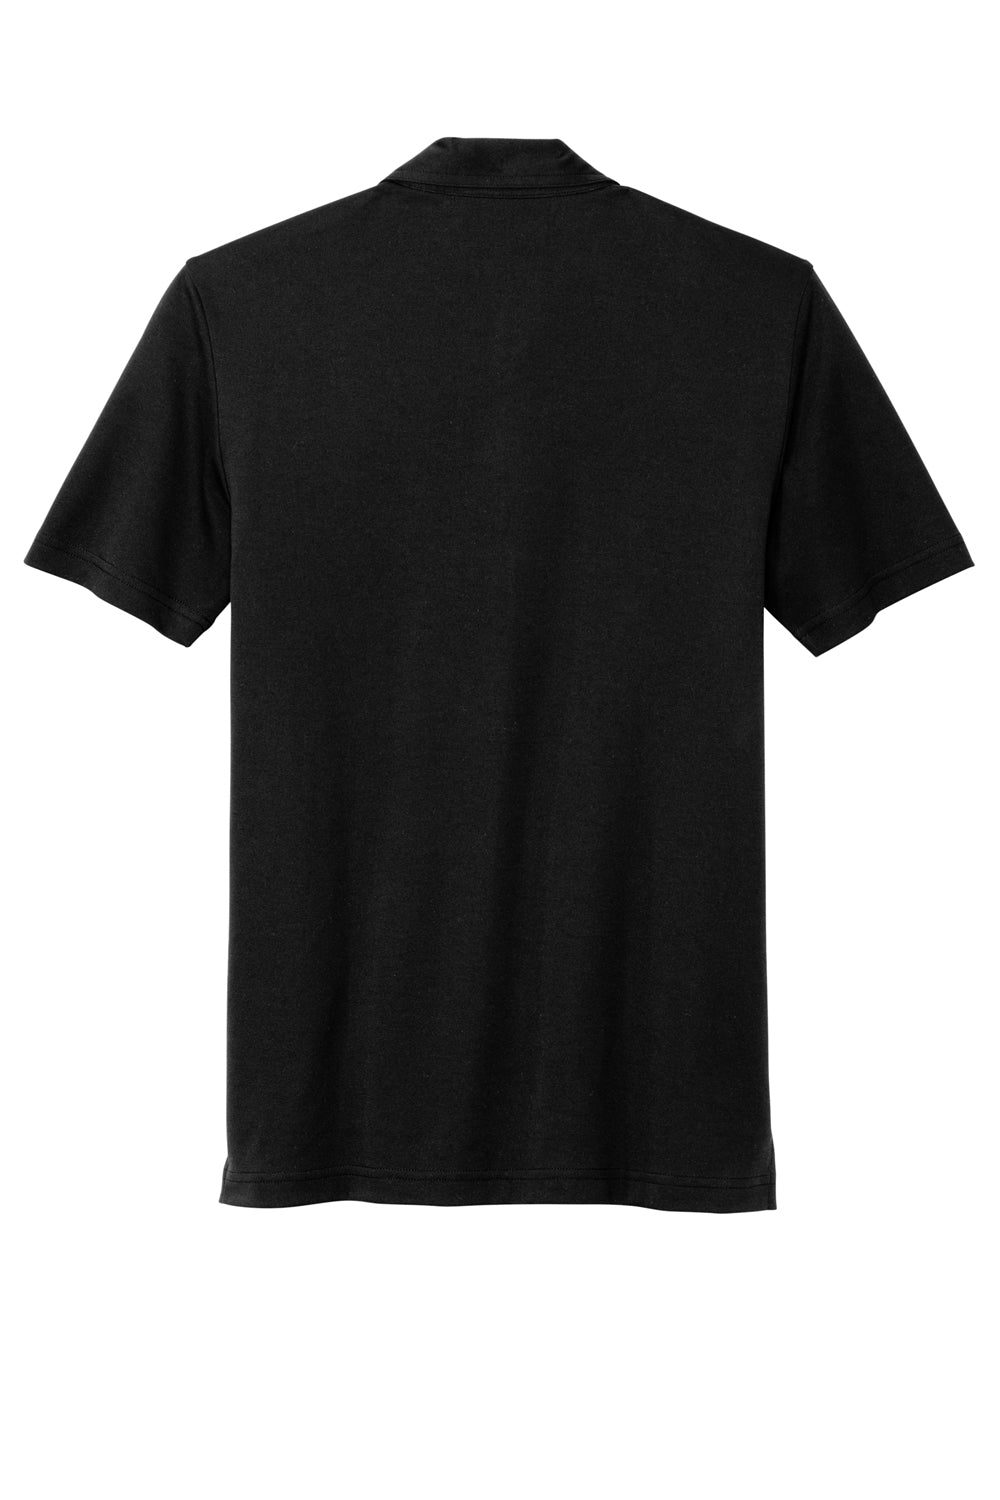 TravisMathew TM1MW450 Mens Monterey Wrinkle Resistant Chest Stripe Short Sleeve Polo Shirt Black Flat Back